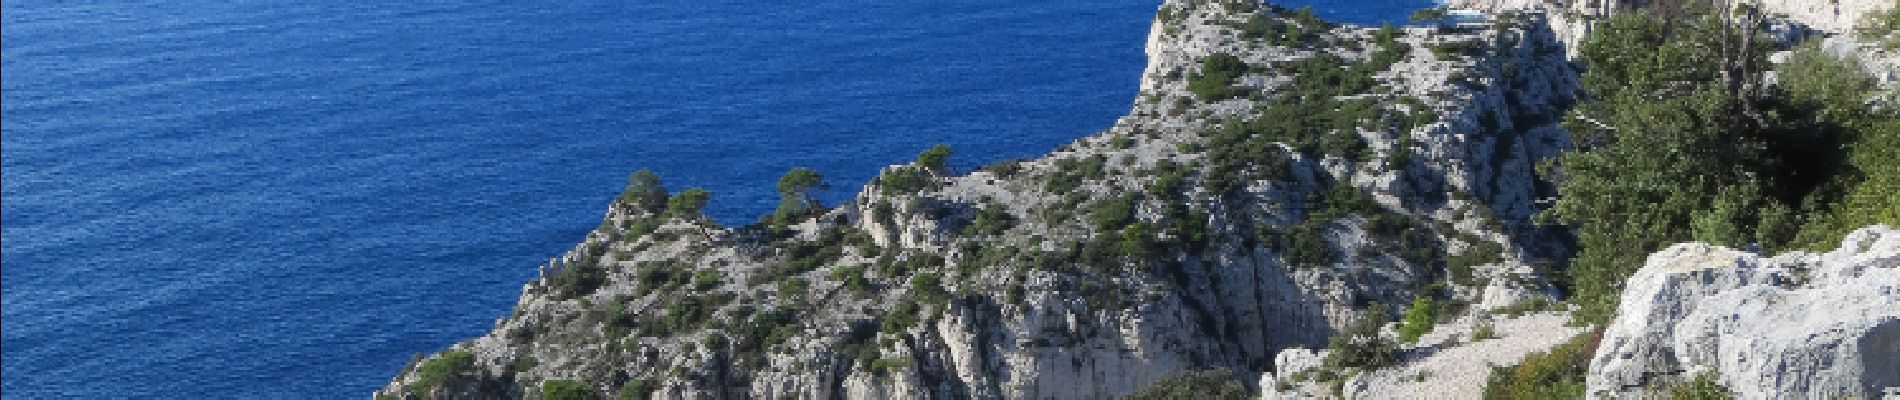 POI Marseille - les iles de Marseille - Photo